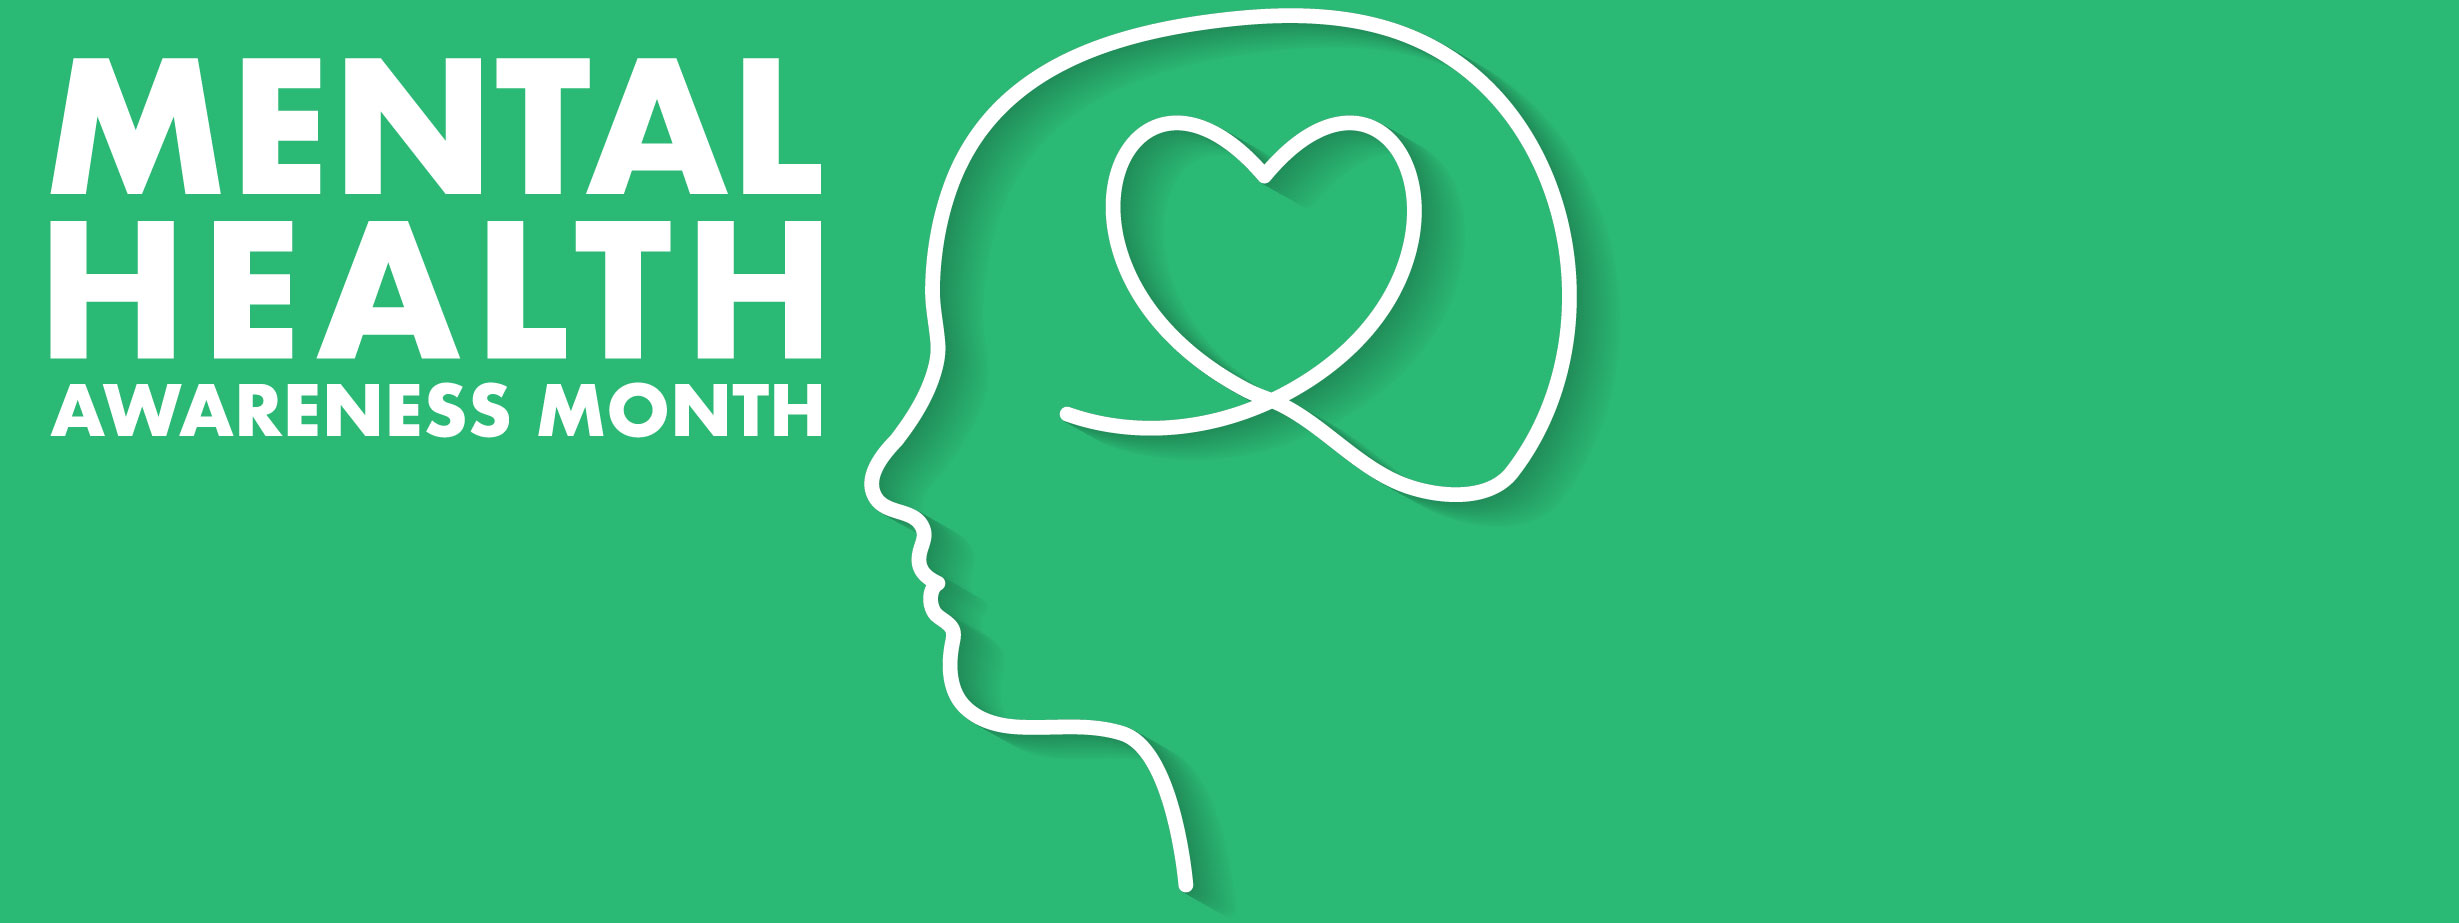 Mental Health Awareness Month web banner